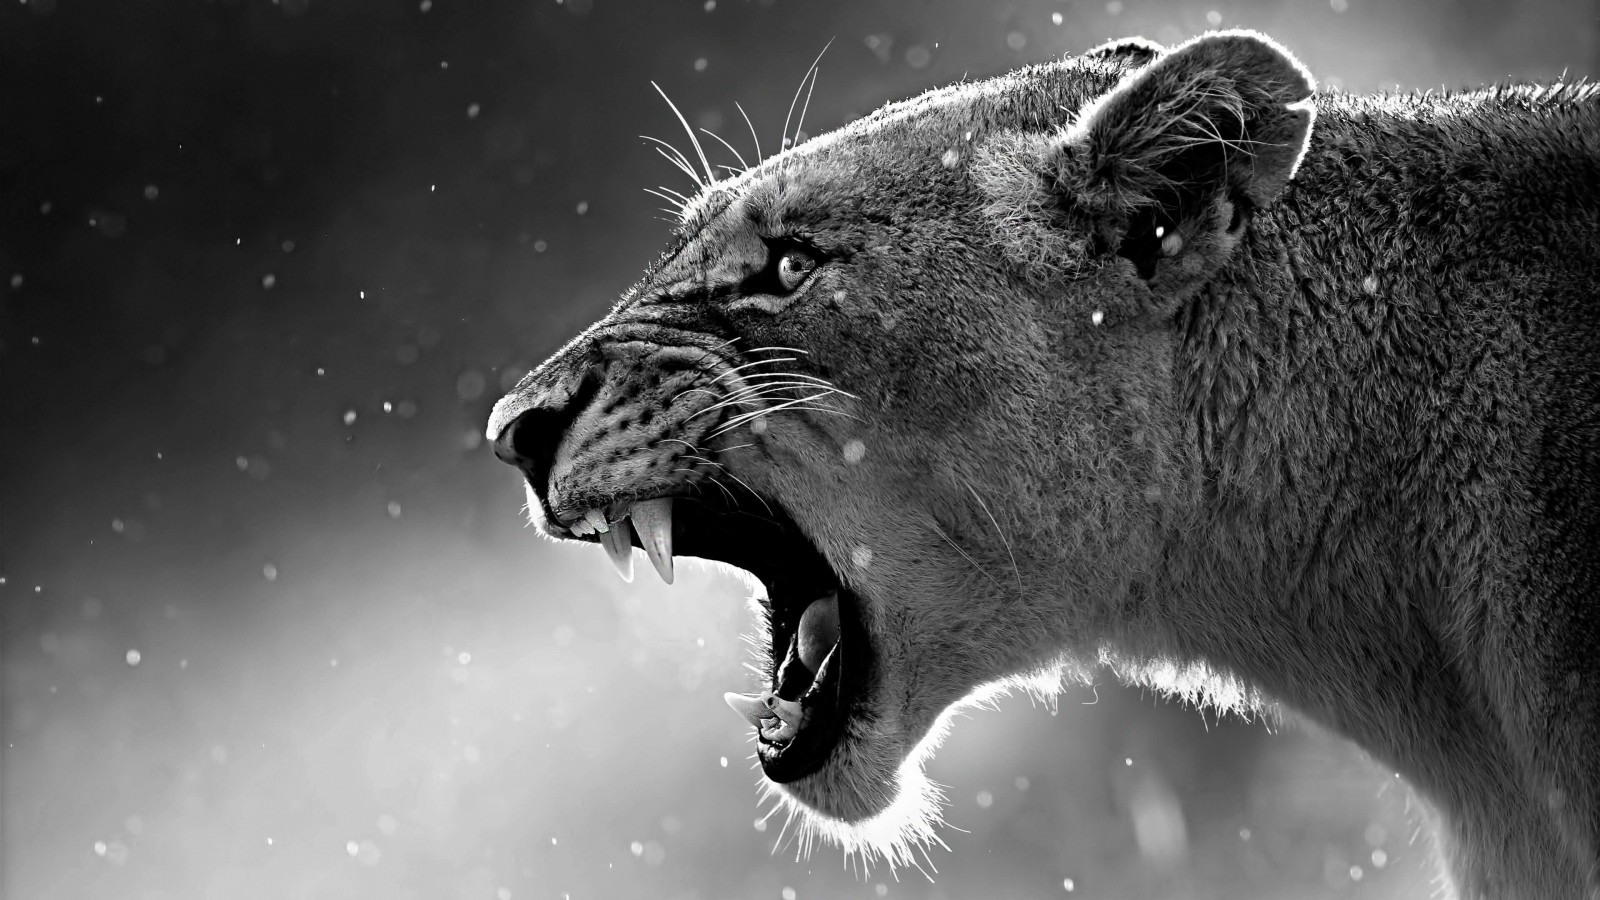 Lioness in Black & White Wallpaper for Desktop 1600x900